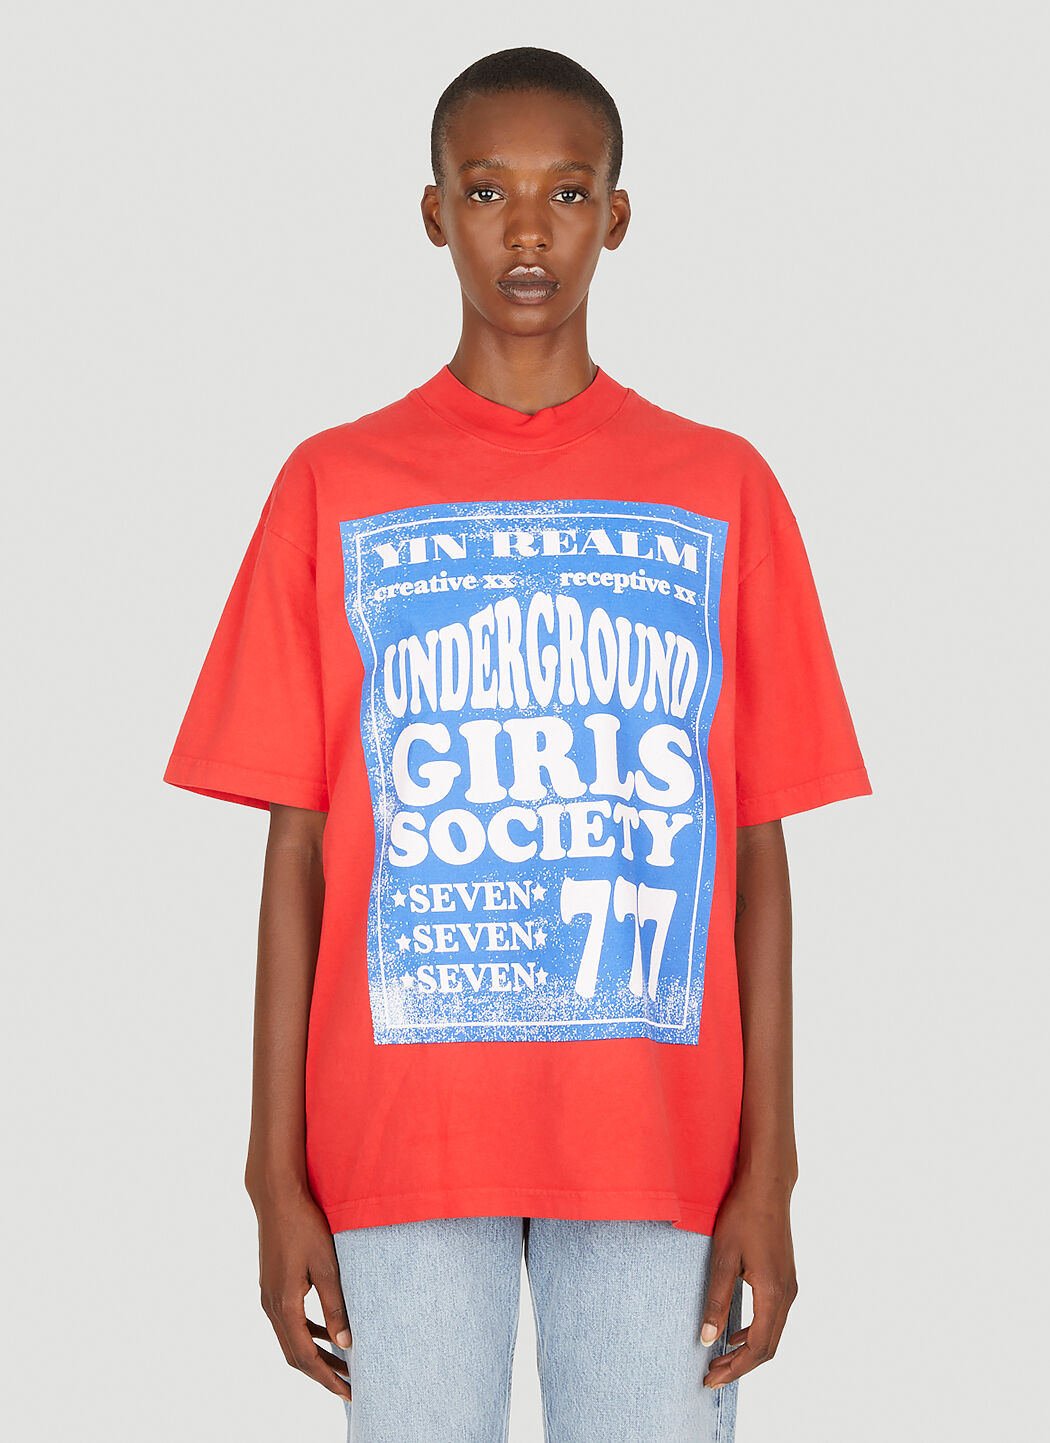 Come Tees Underground Girls Society Raver T恤 红 com0349001